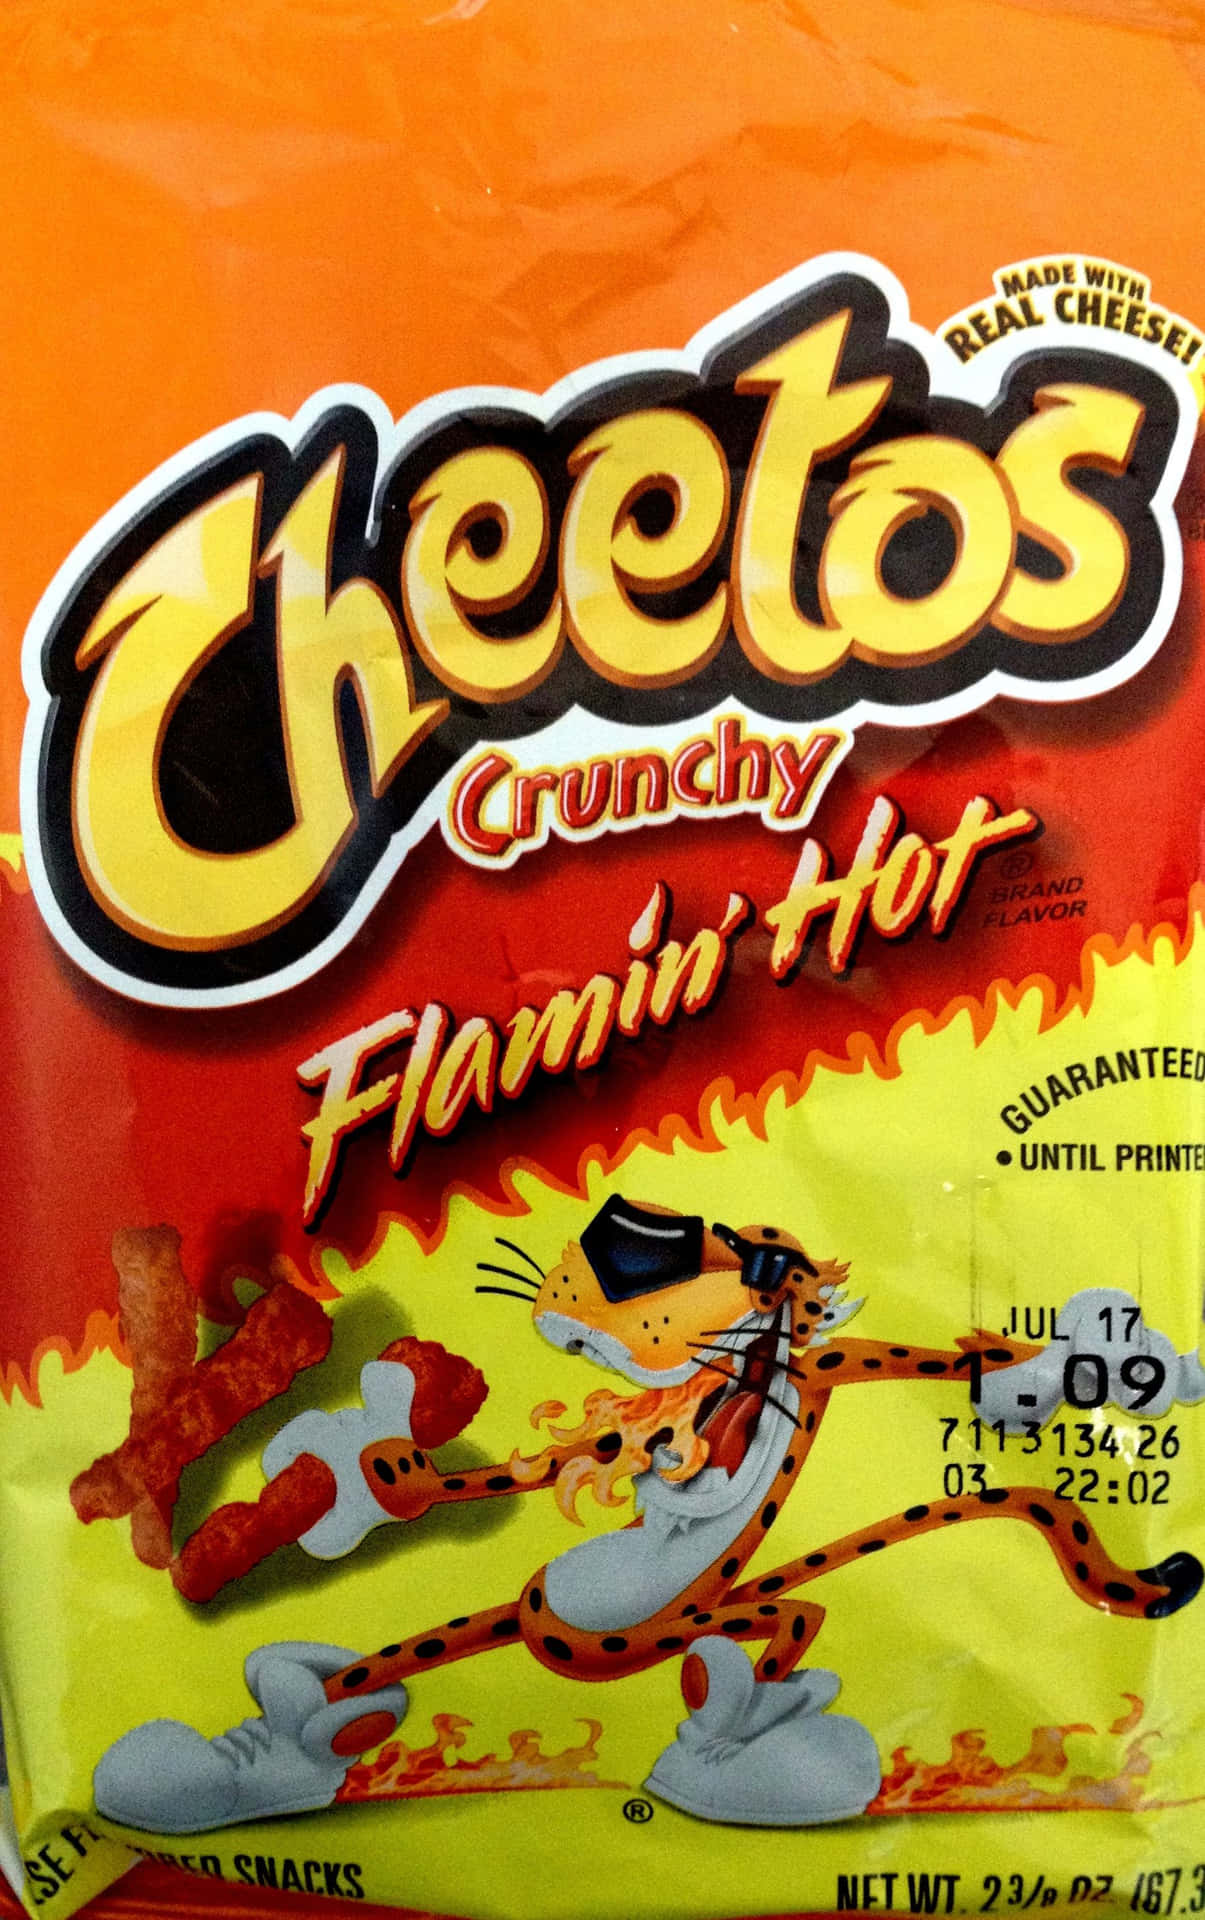 Download Hot Cheetos 1824 X 2907 Wallpaper